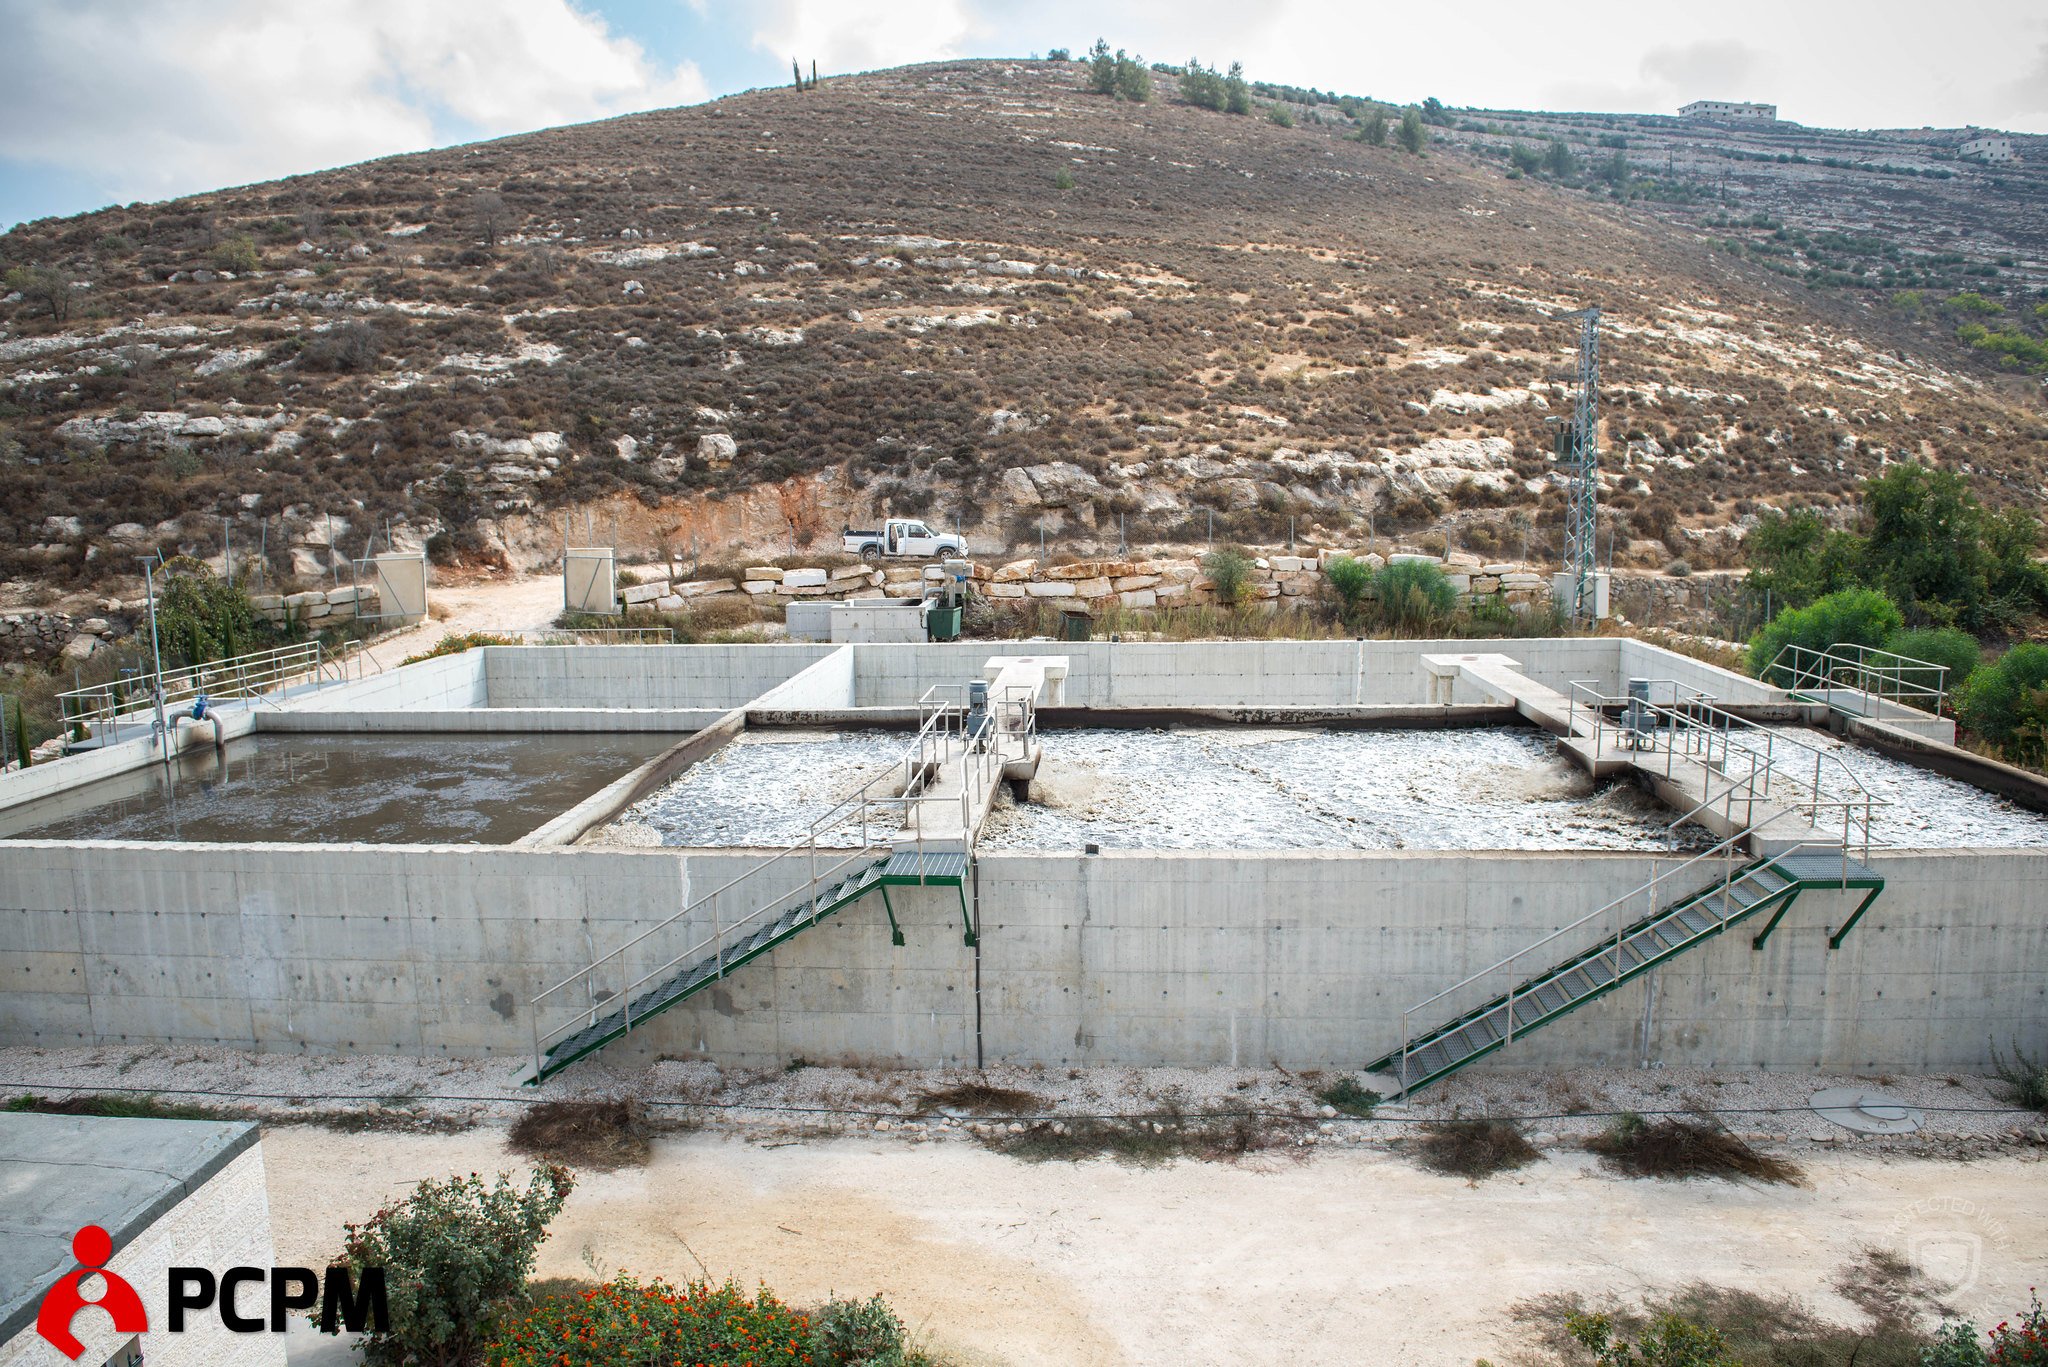 waste water treatment plant in Palestine - Water Infrastructure in Palestine